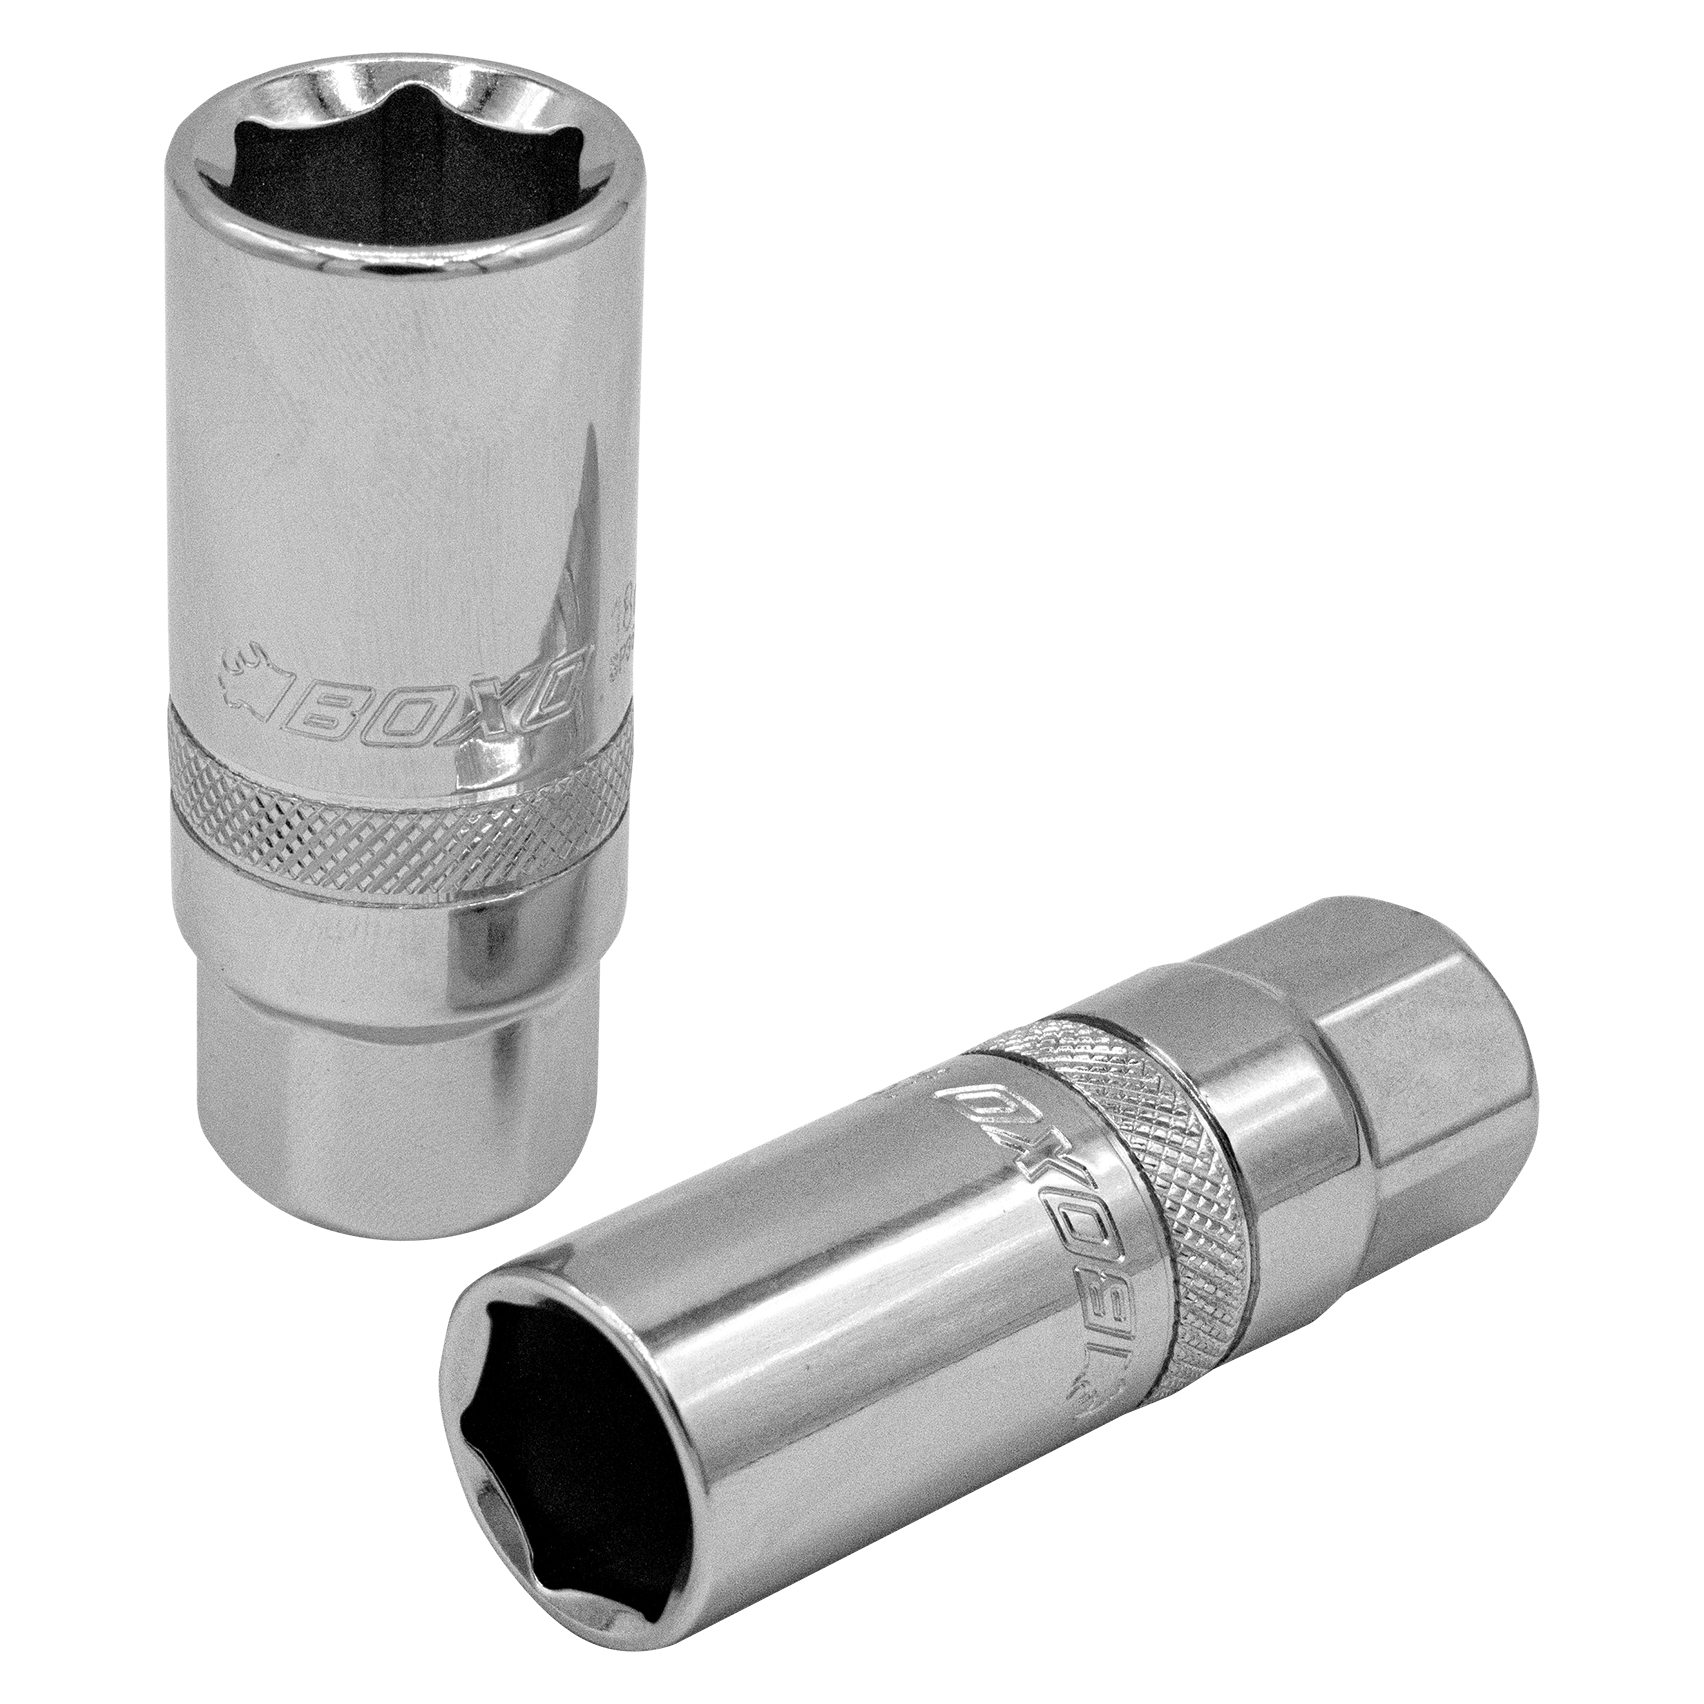 BOXO 1/2" Spark Plug Socket - Sizes 16mm to 21mm